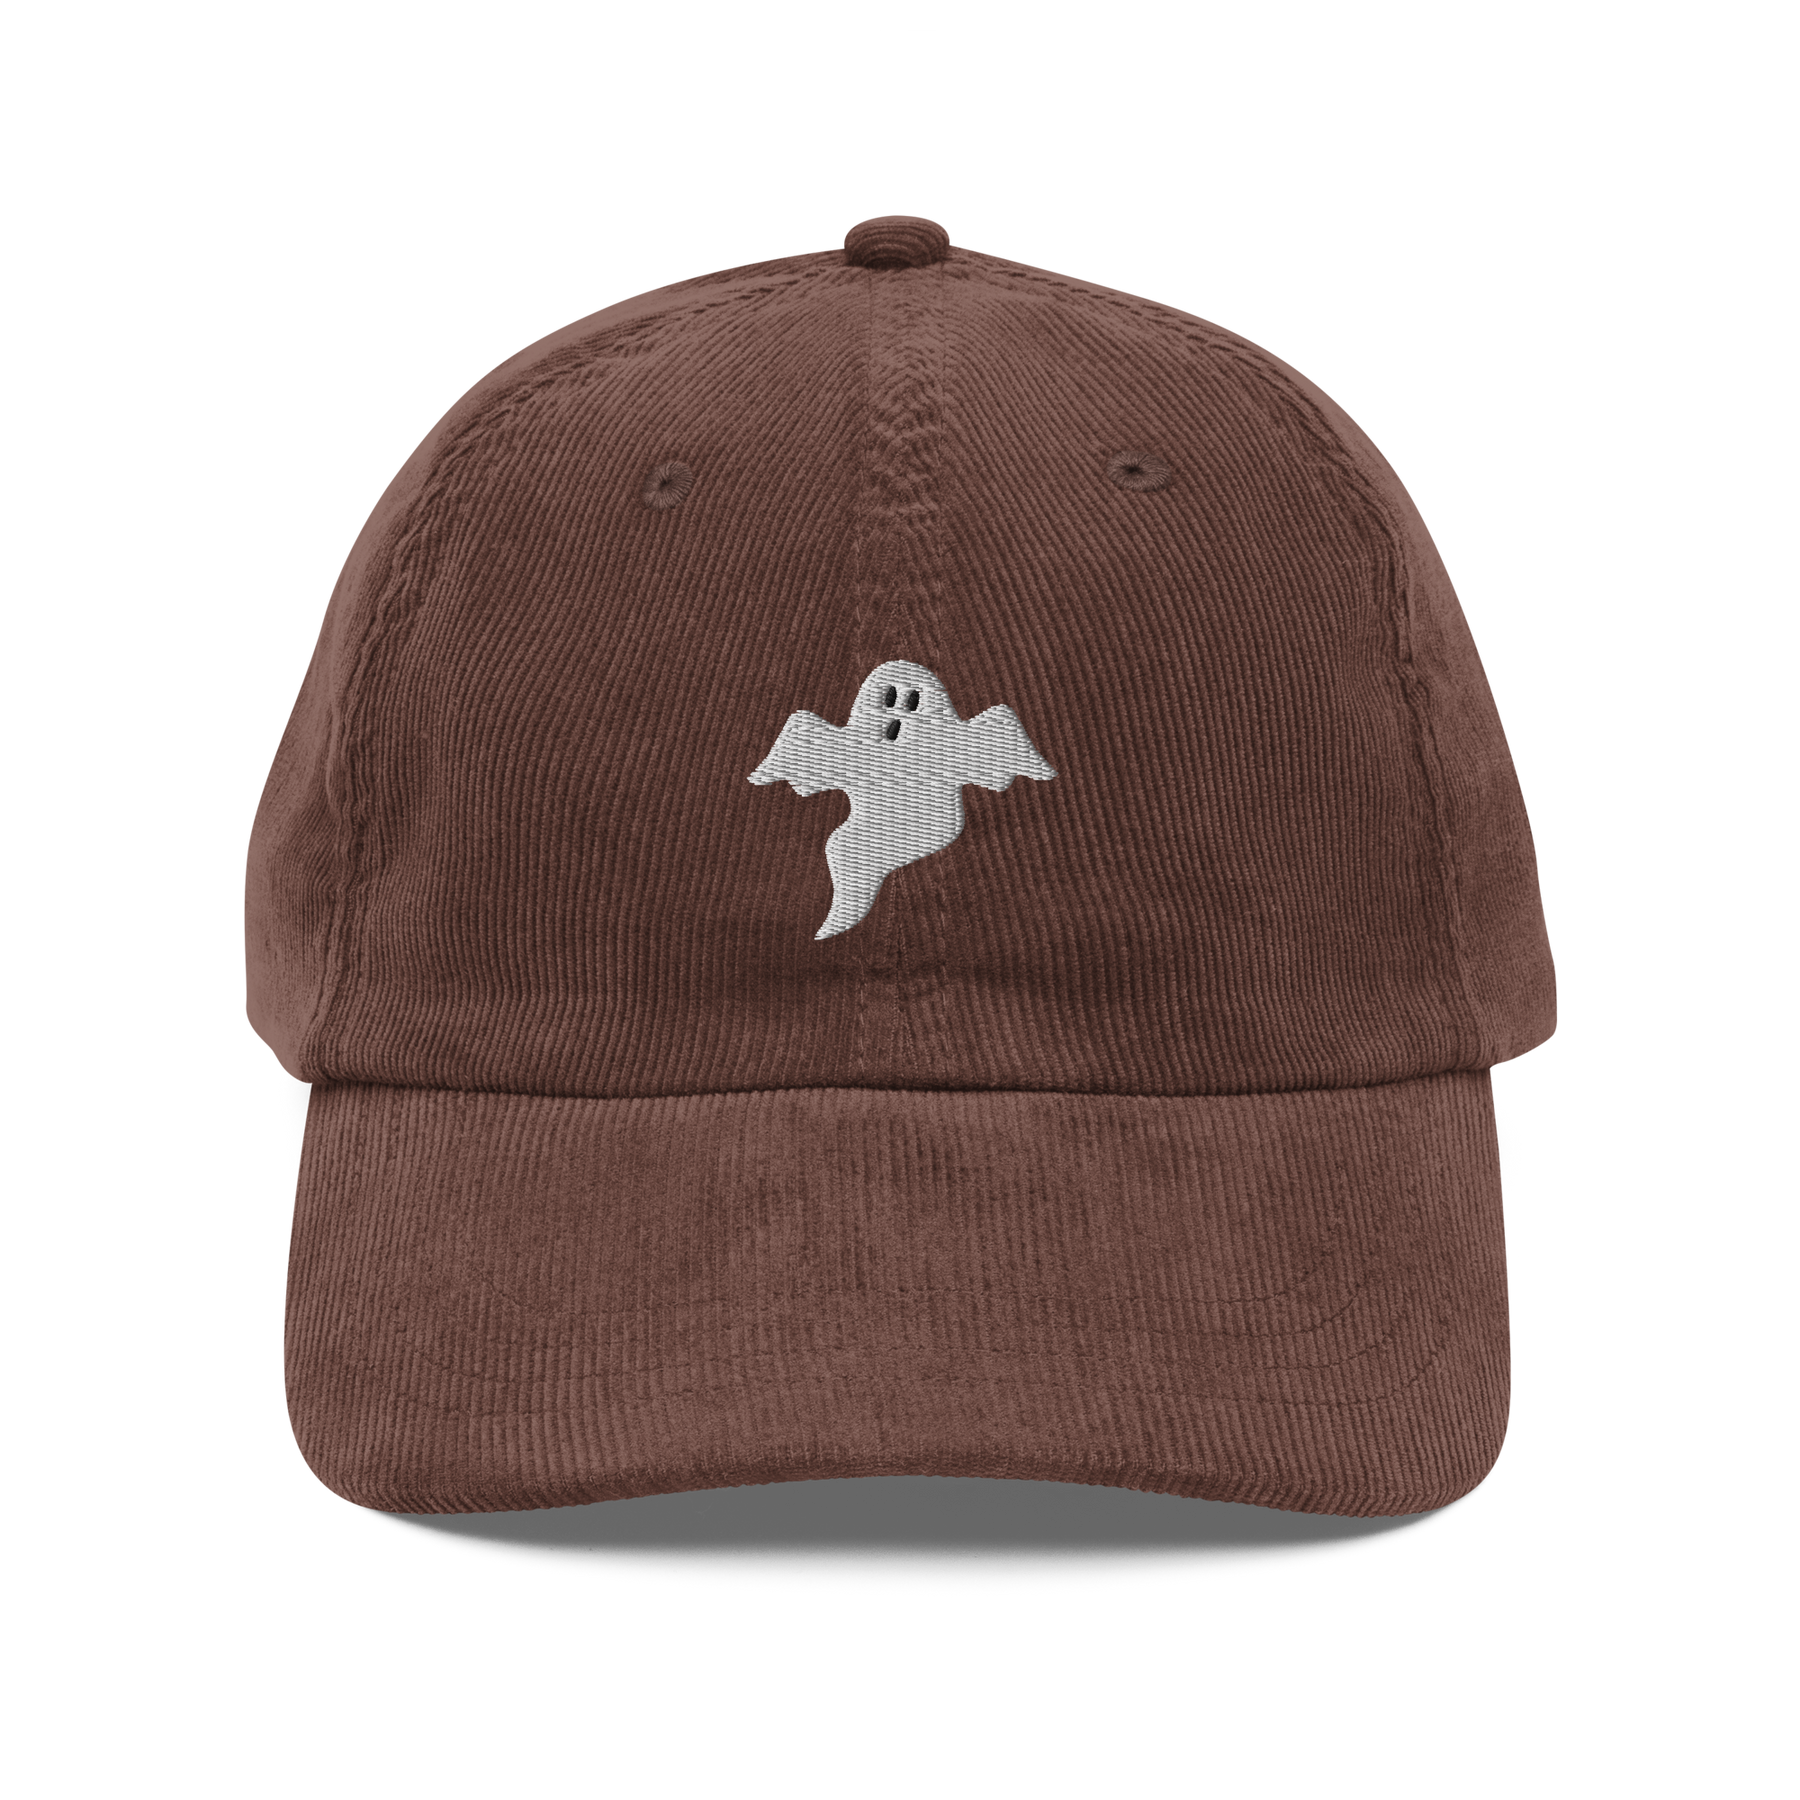 Ghost Corduroy Hat